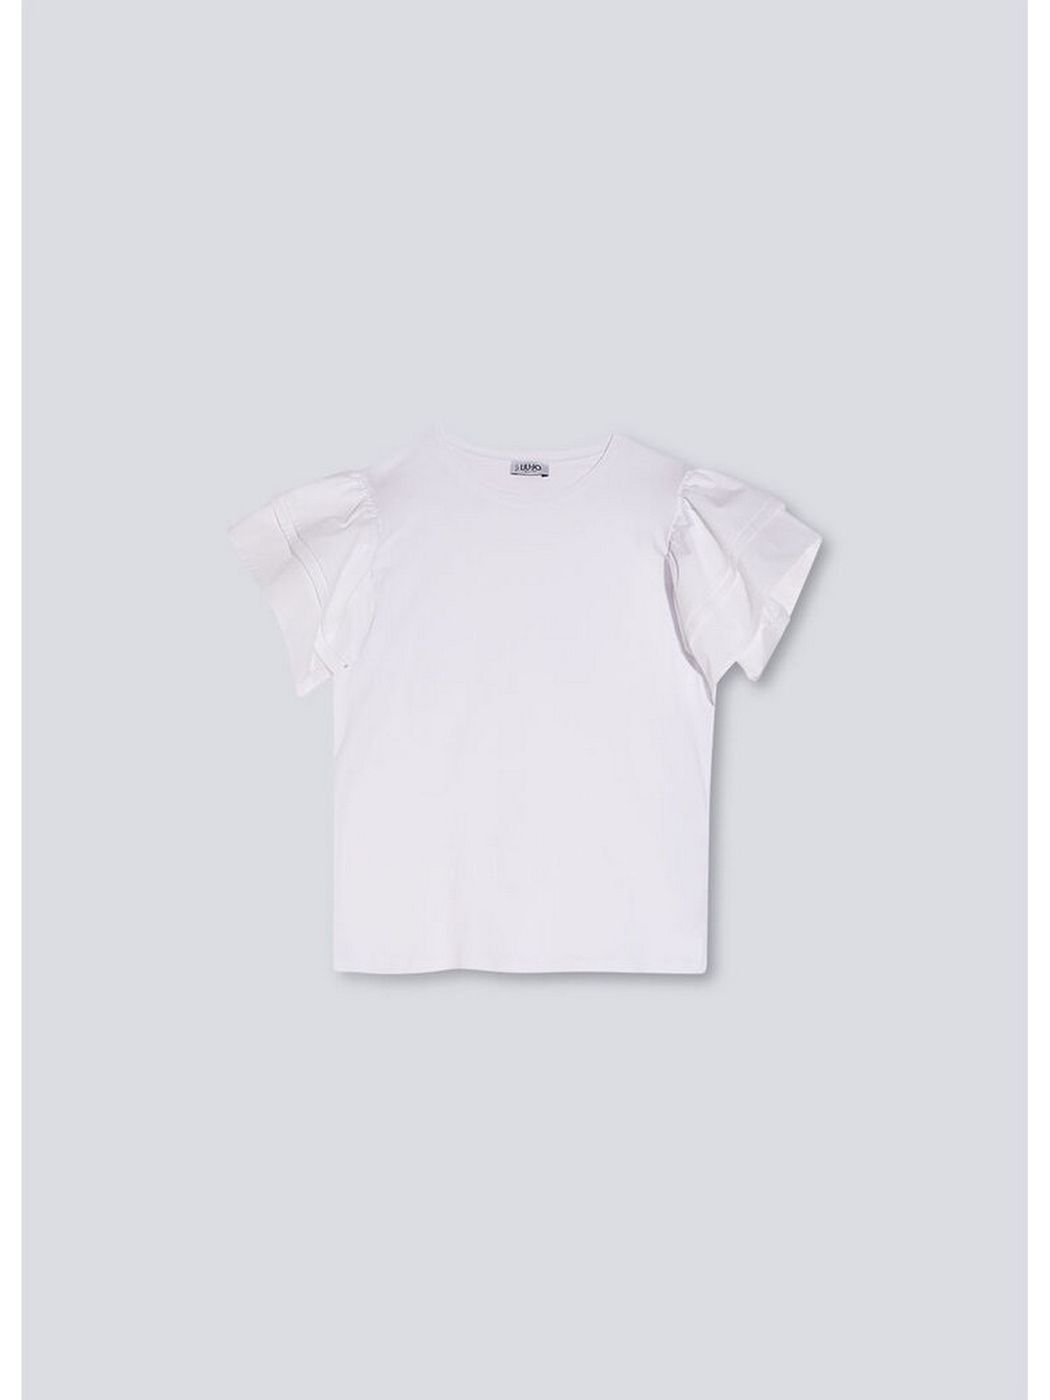 LIU JO FRESH T-Shirt e Polo Donna  JA2118 J6571 Bianco